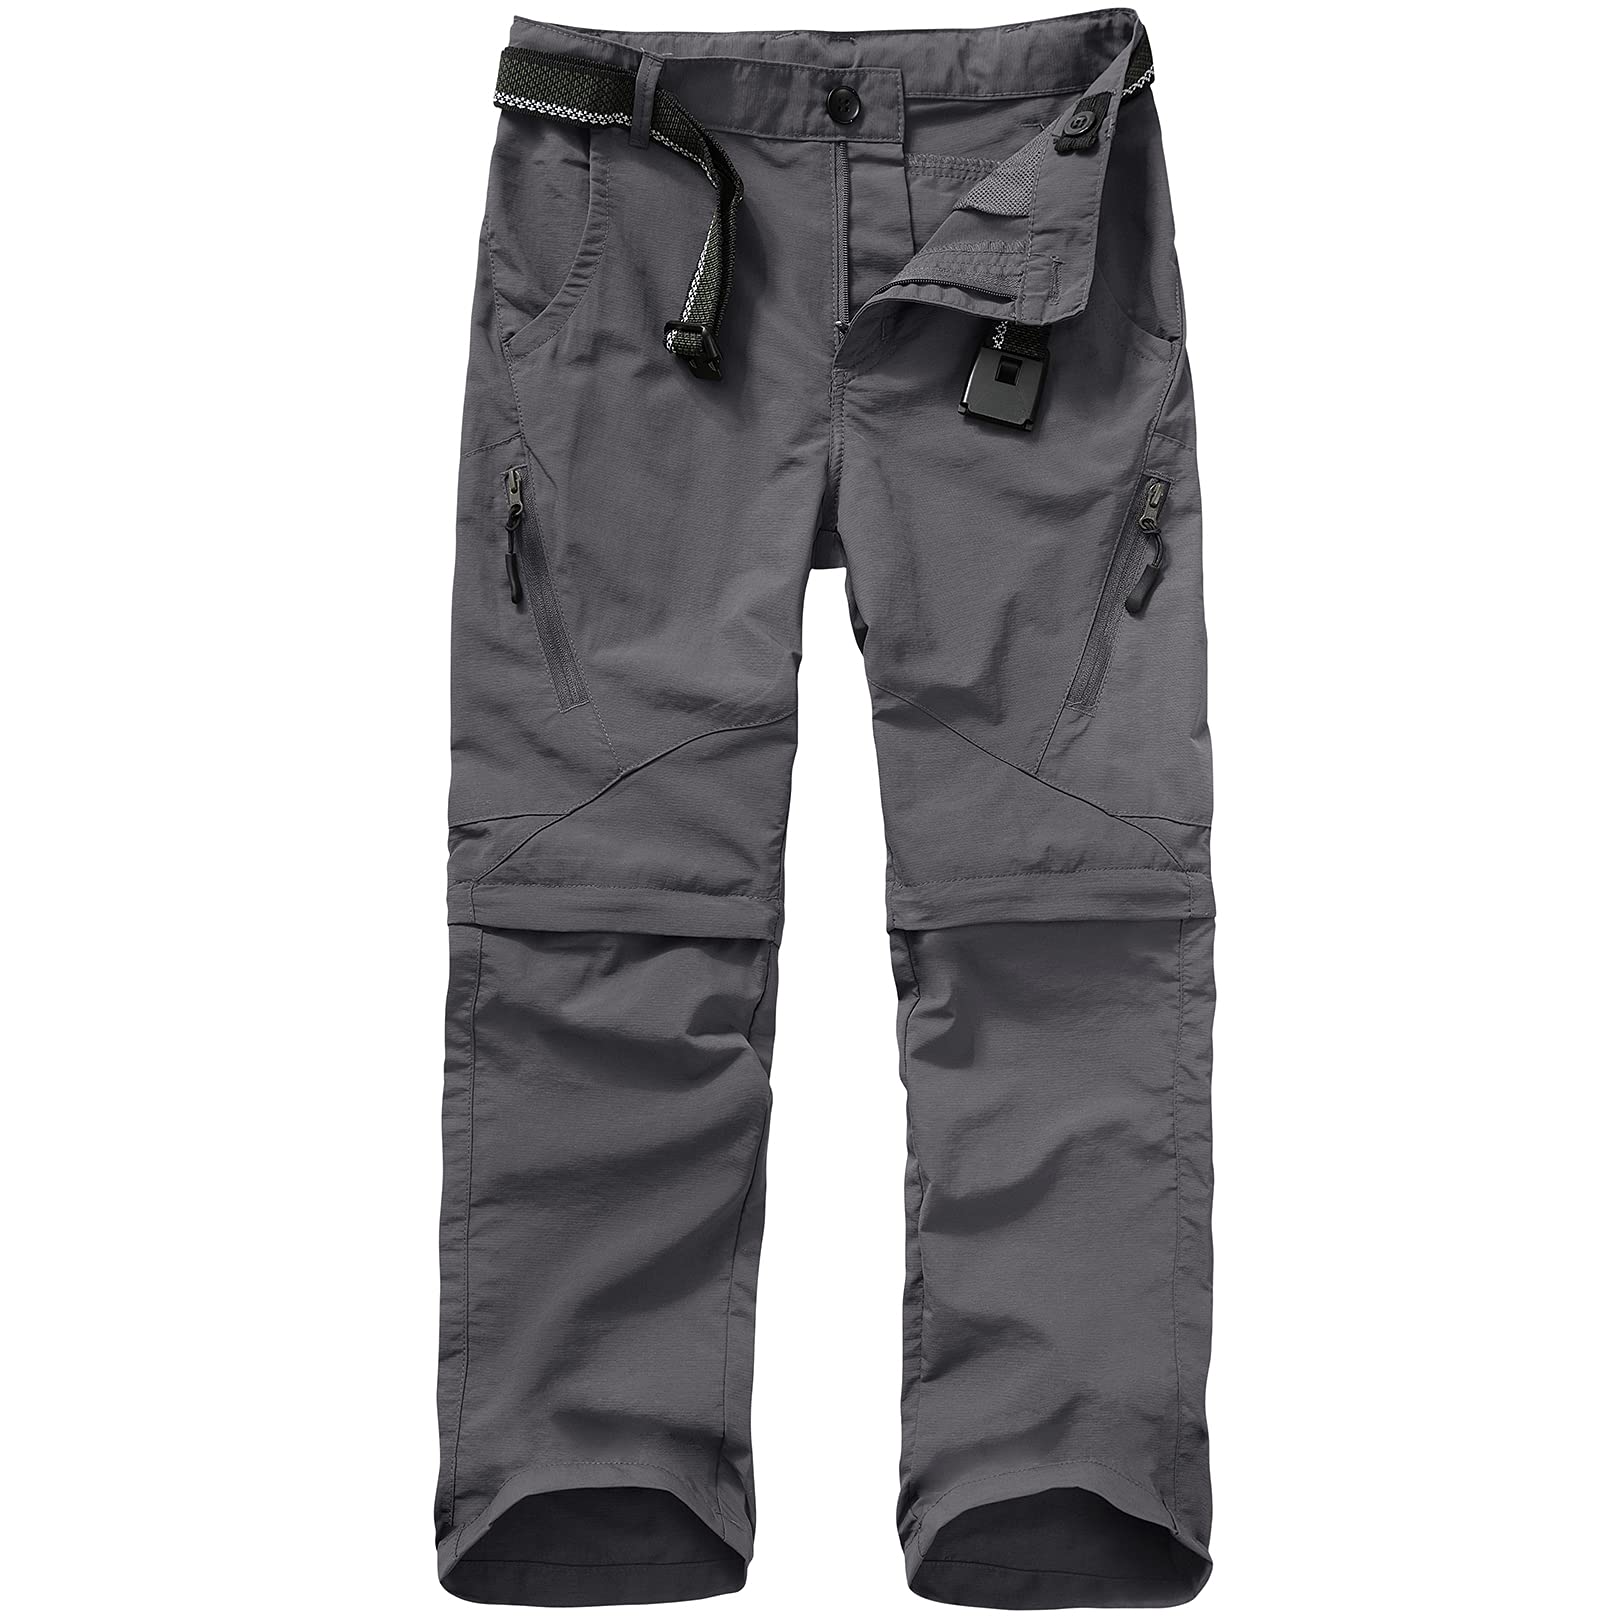 inhzoy Kids Boys Cargo Pants Hip Hop Street Dance Pants Trousers Khaki 6 -  Walmart.com